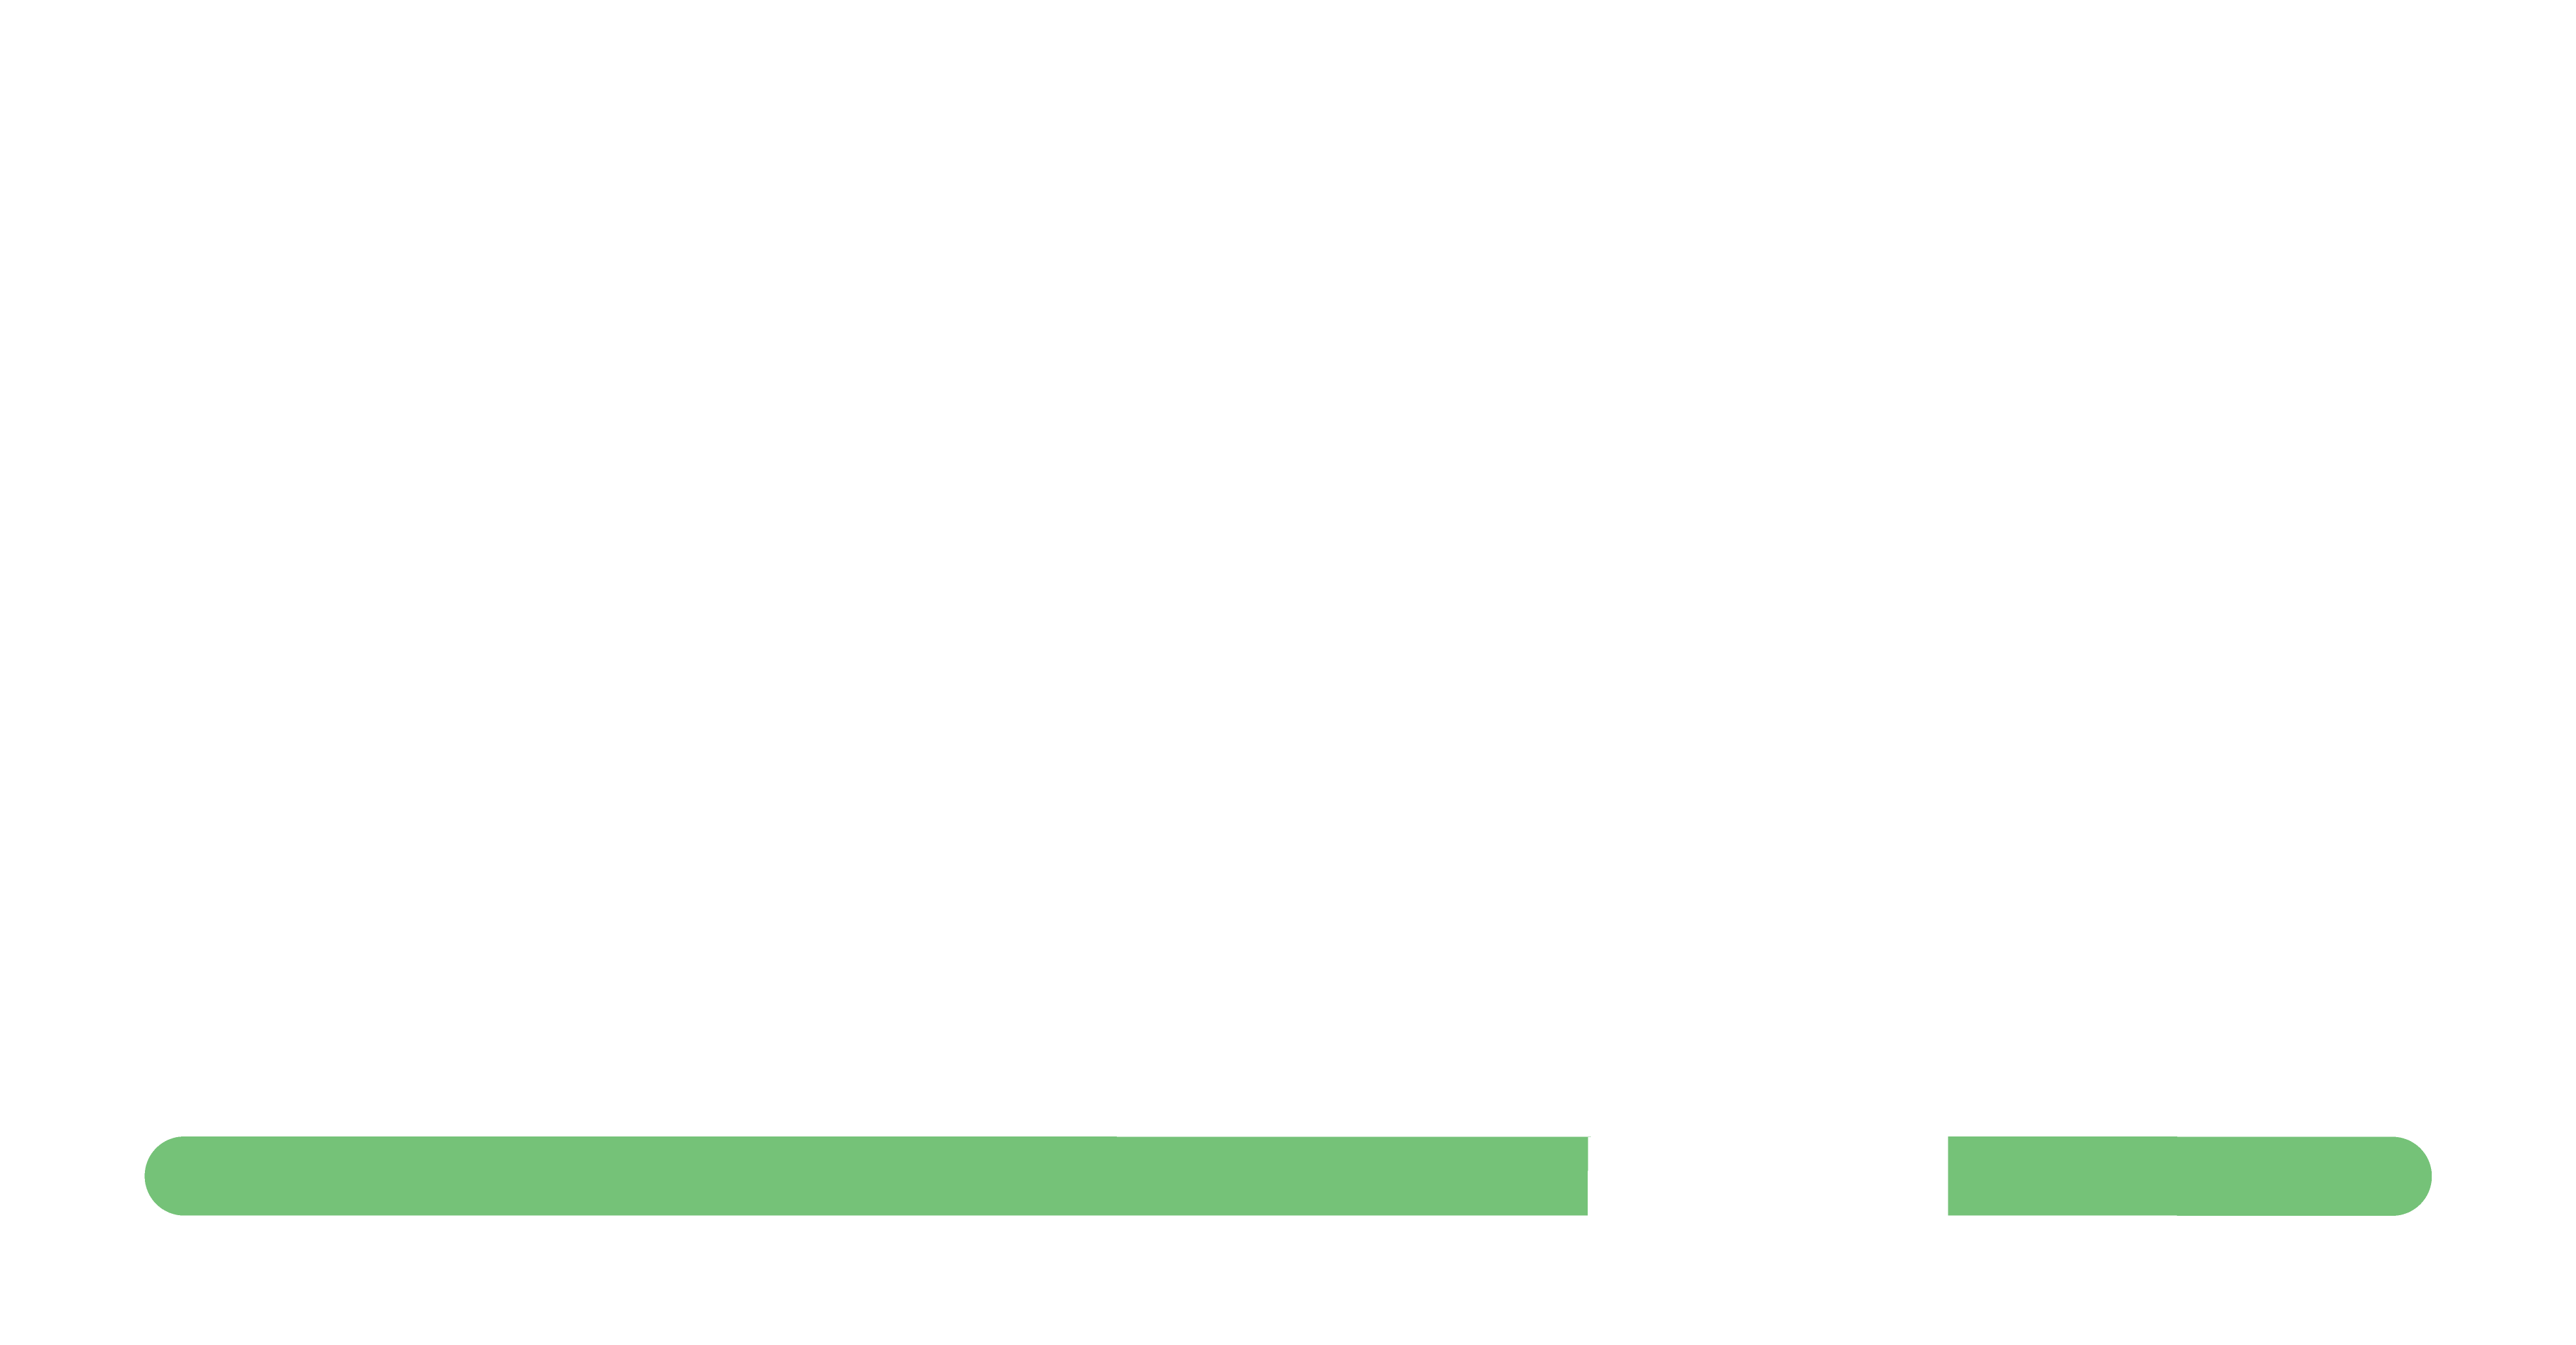 Zelp main logo